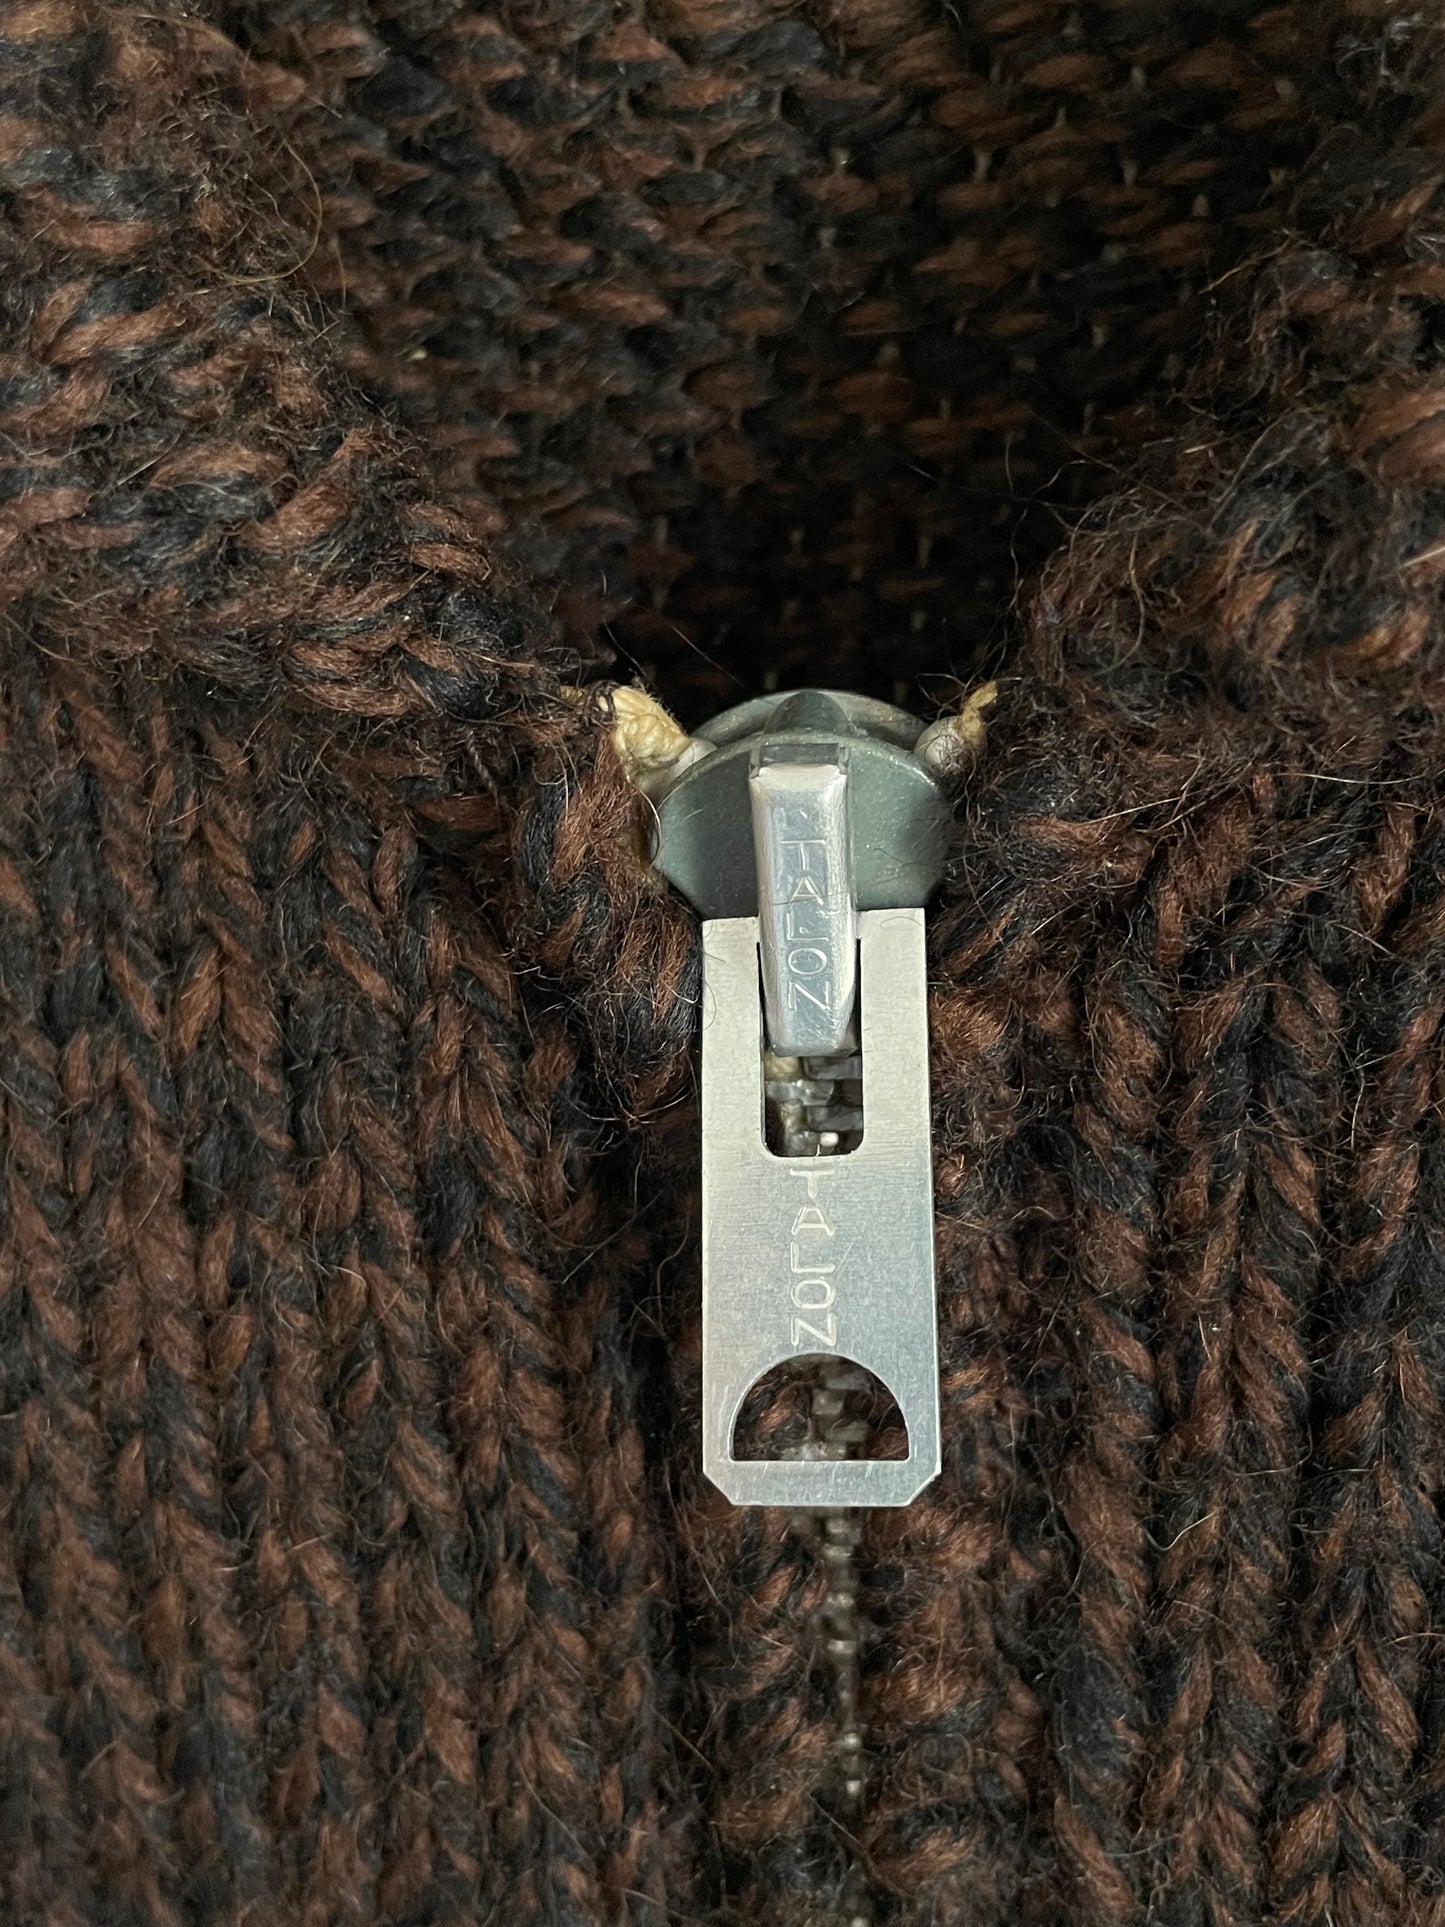 70s Handknit Brown Black Shawl Collar Sweater